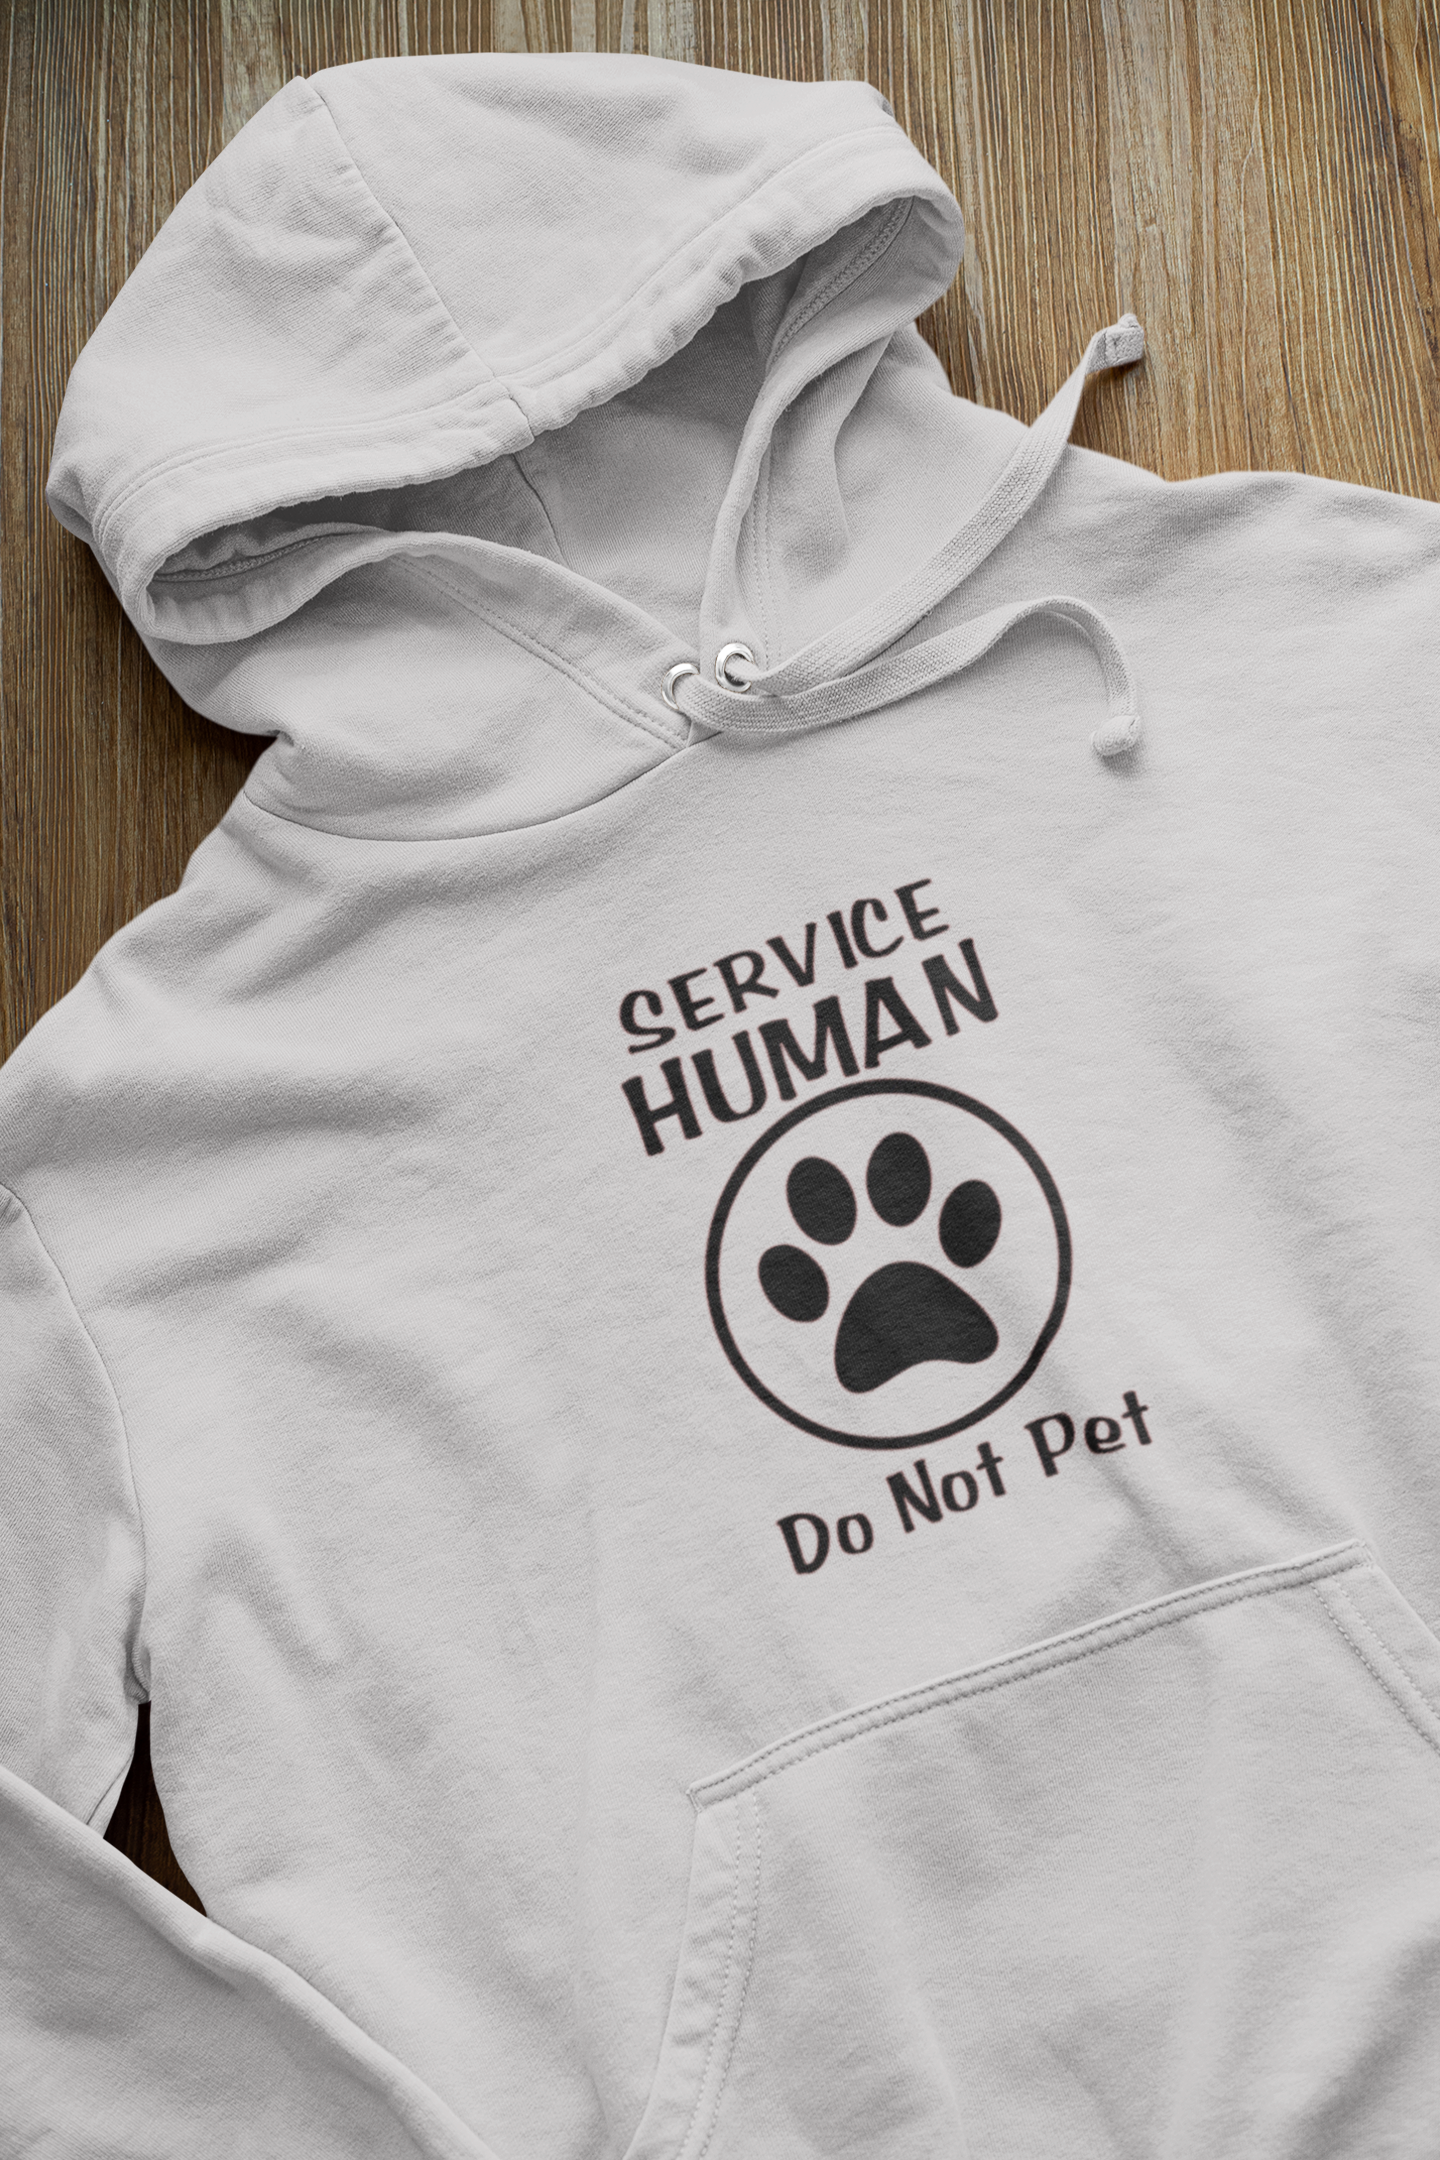 Service Human - Do Not Pet hoodie